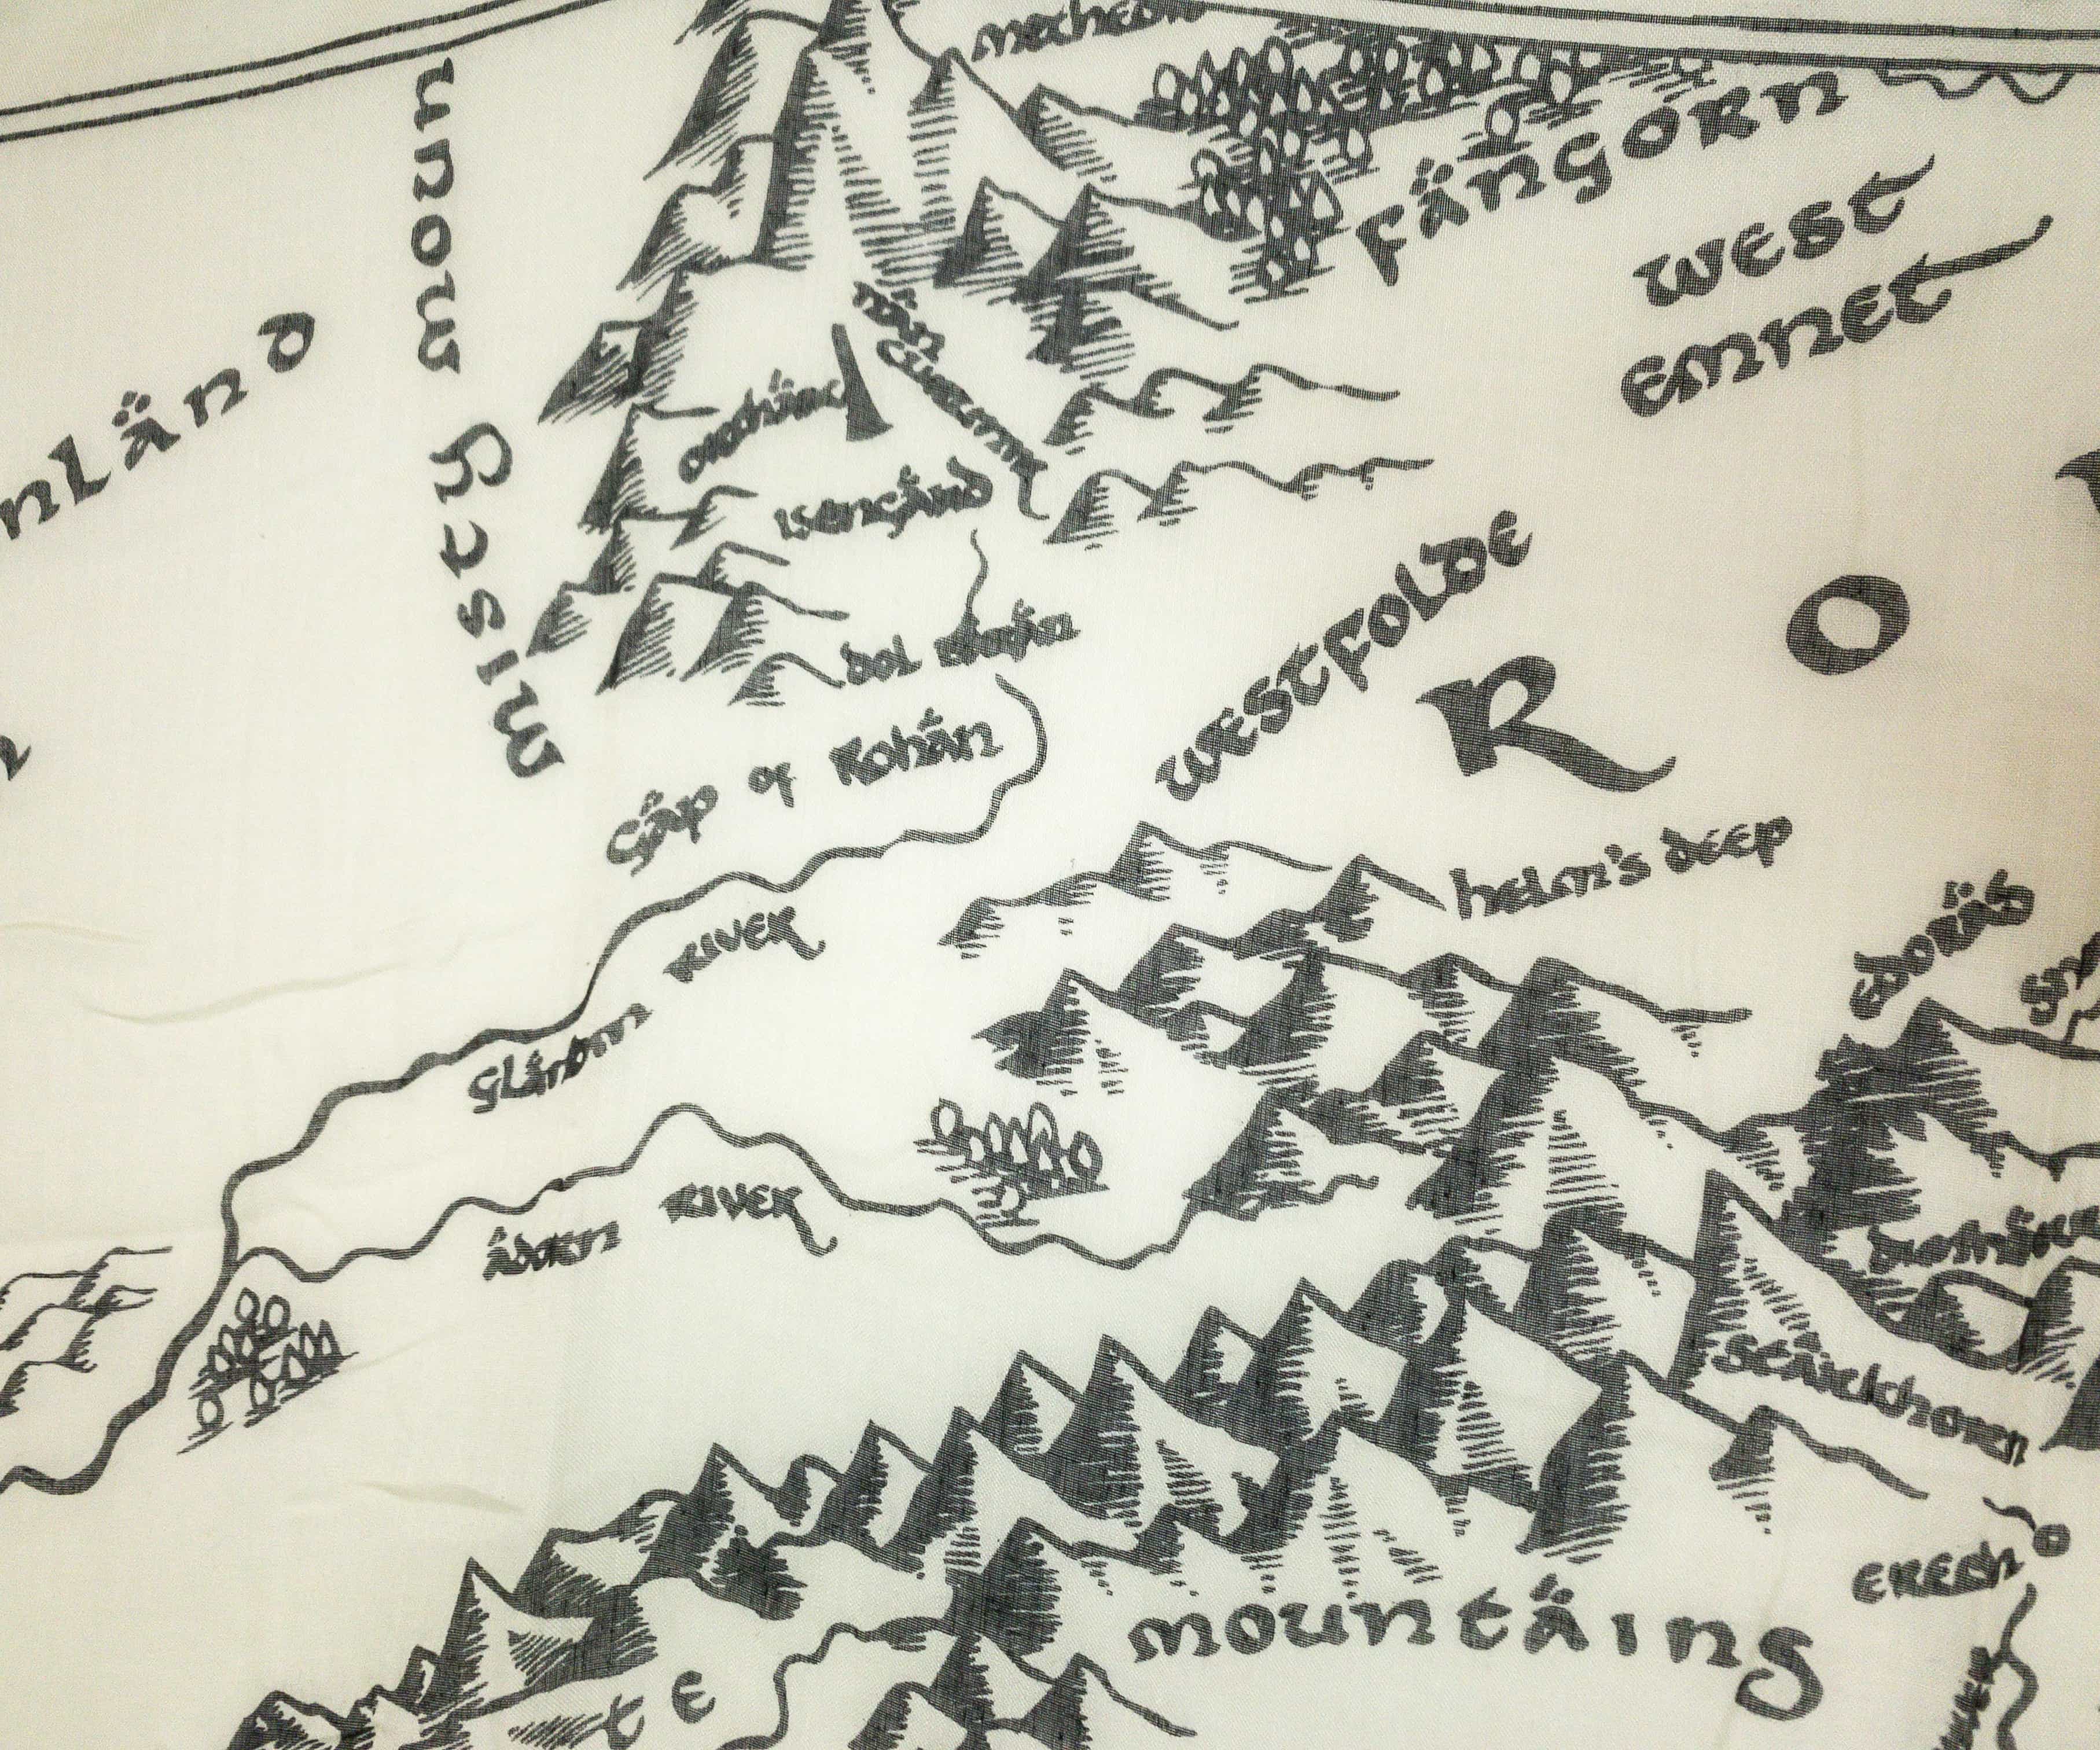 Midgard - Region of Frosthold by LouistheSmall on DeviantArt